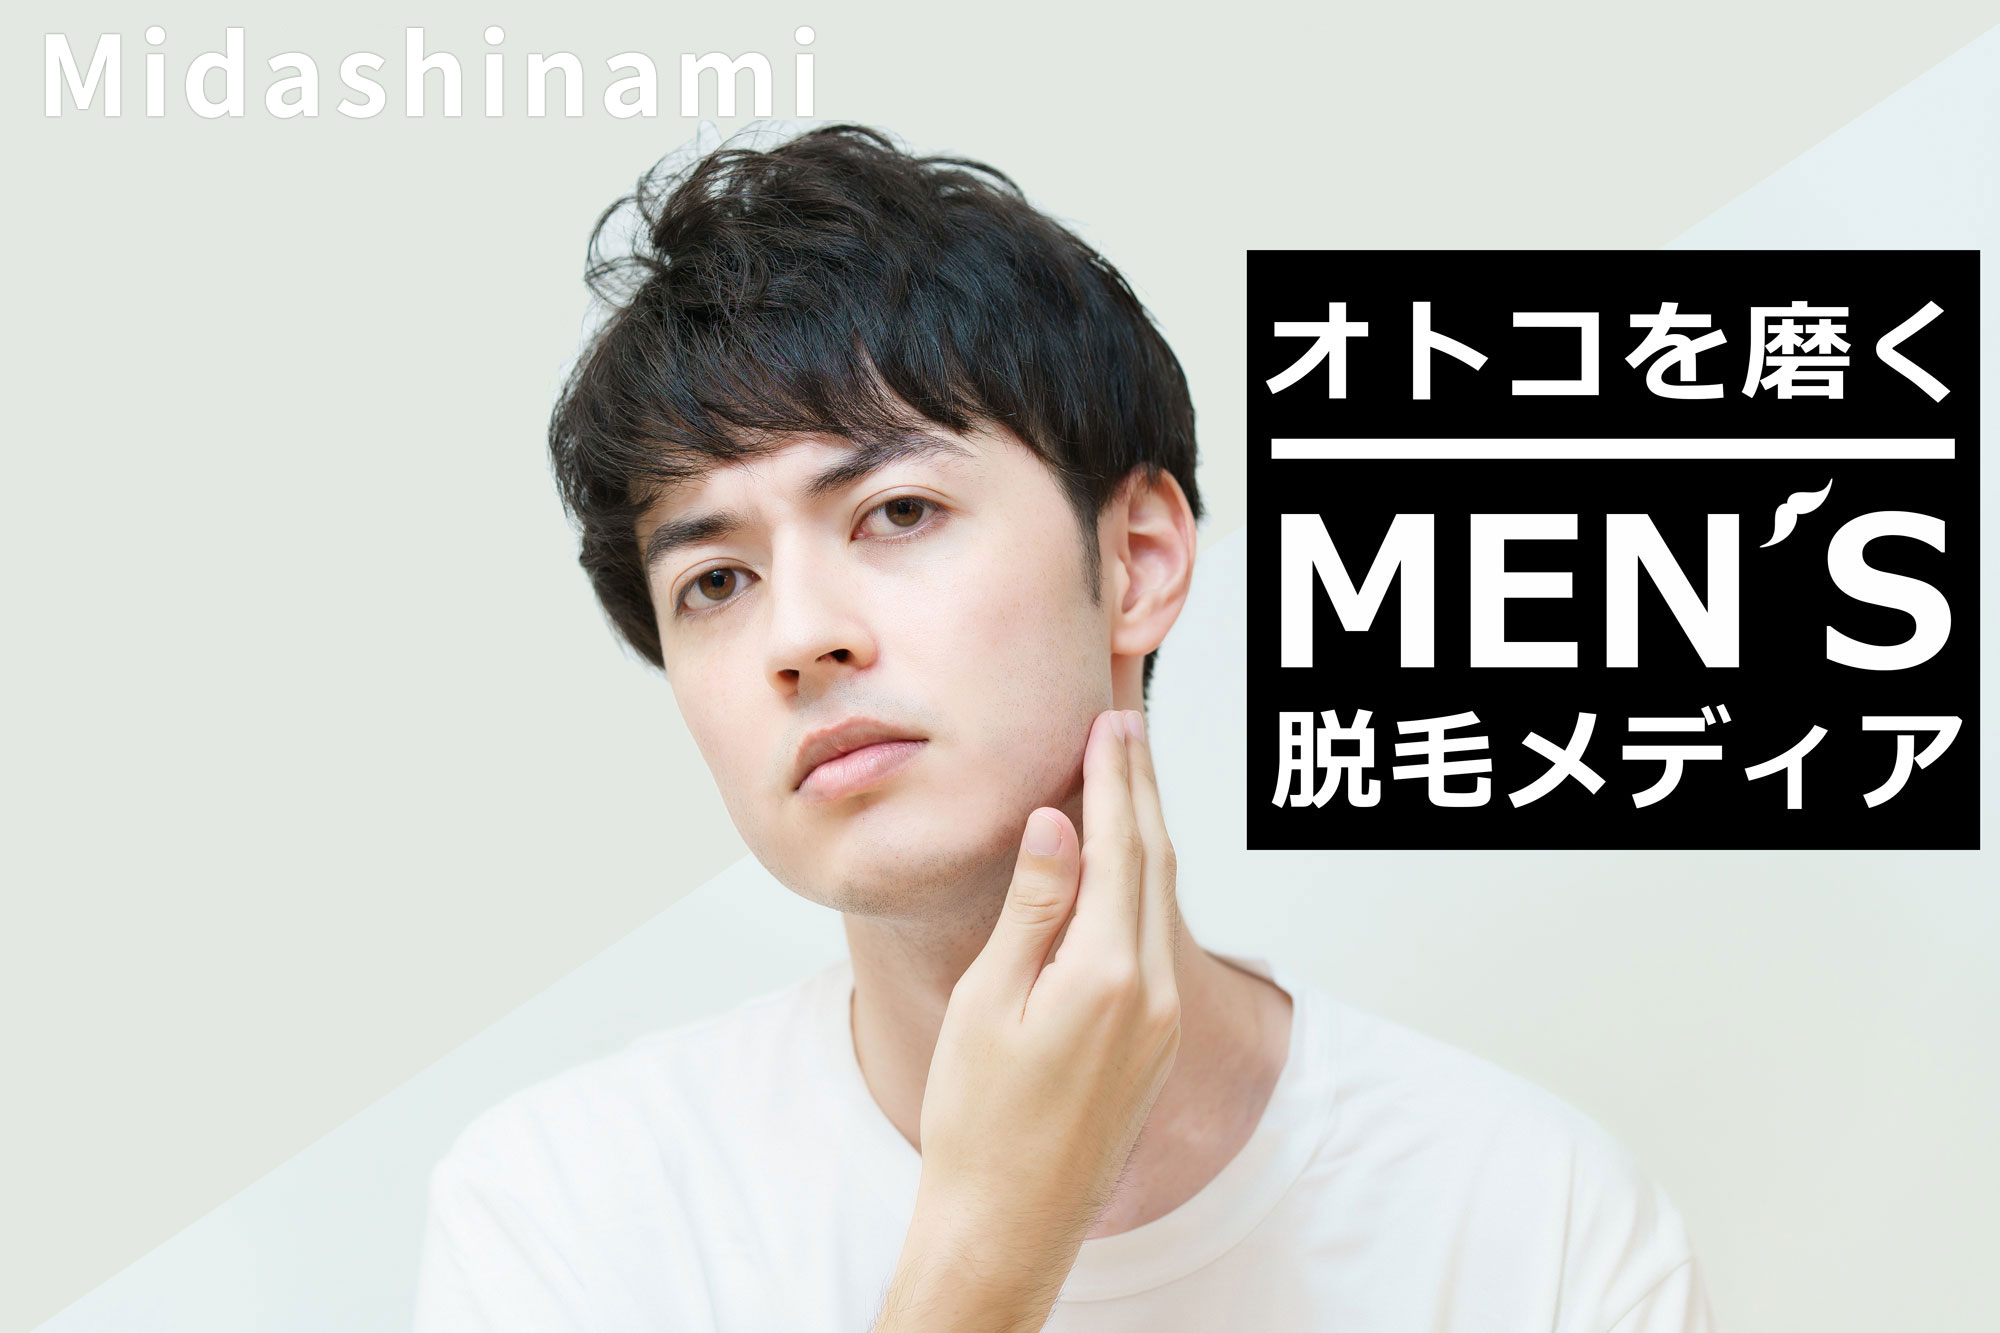 Midashinami|身だしなみ オトコを磨くメンズ脱毛メディア